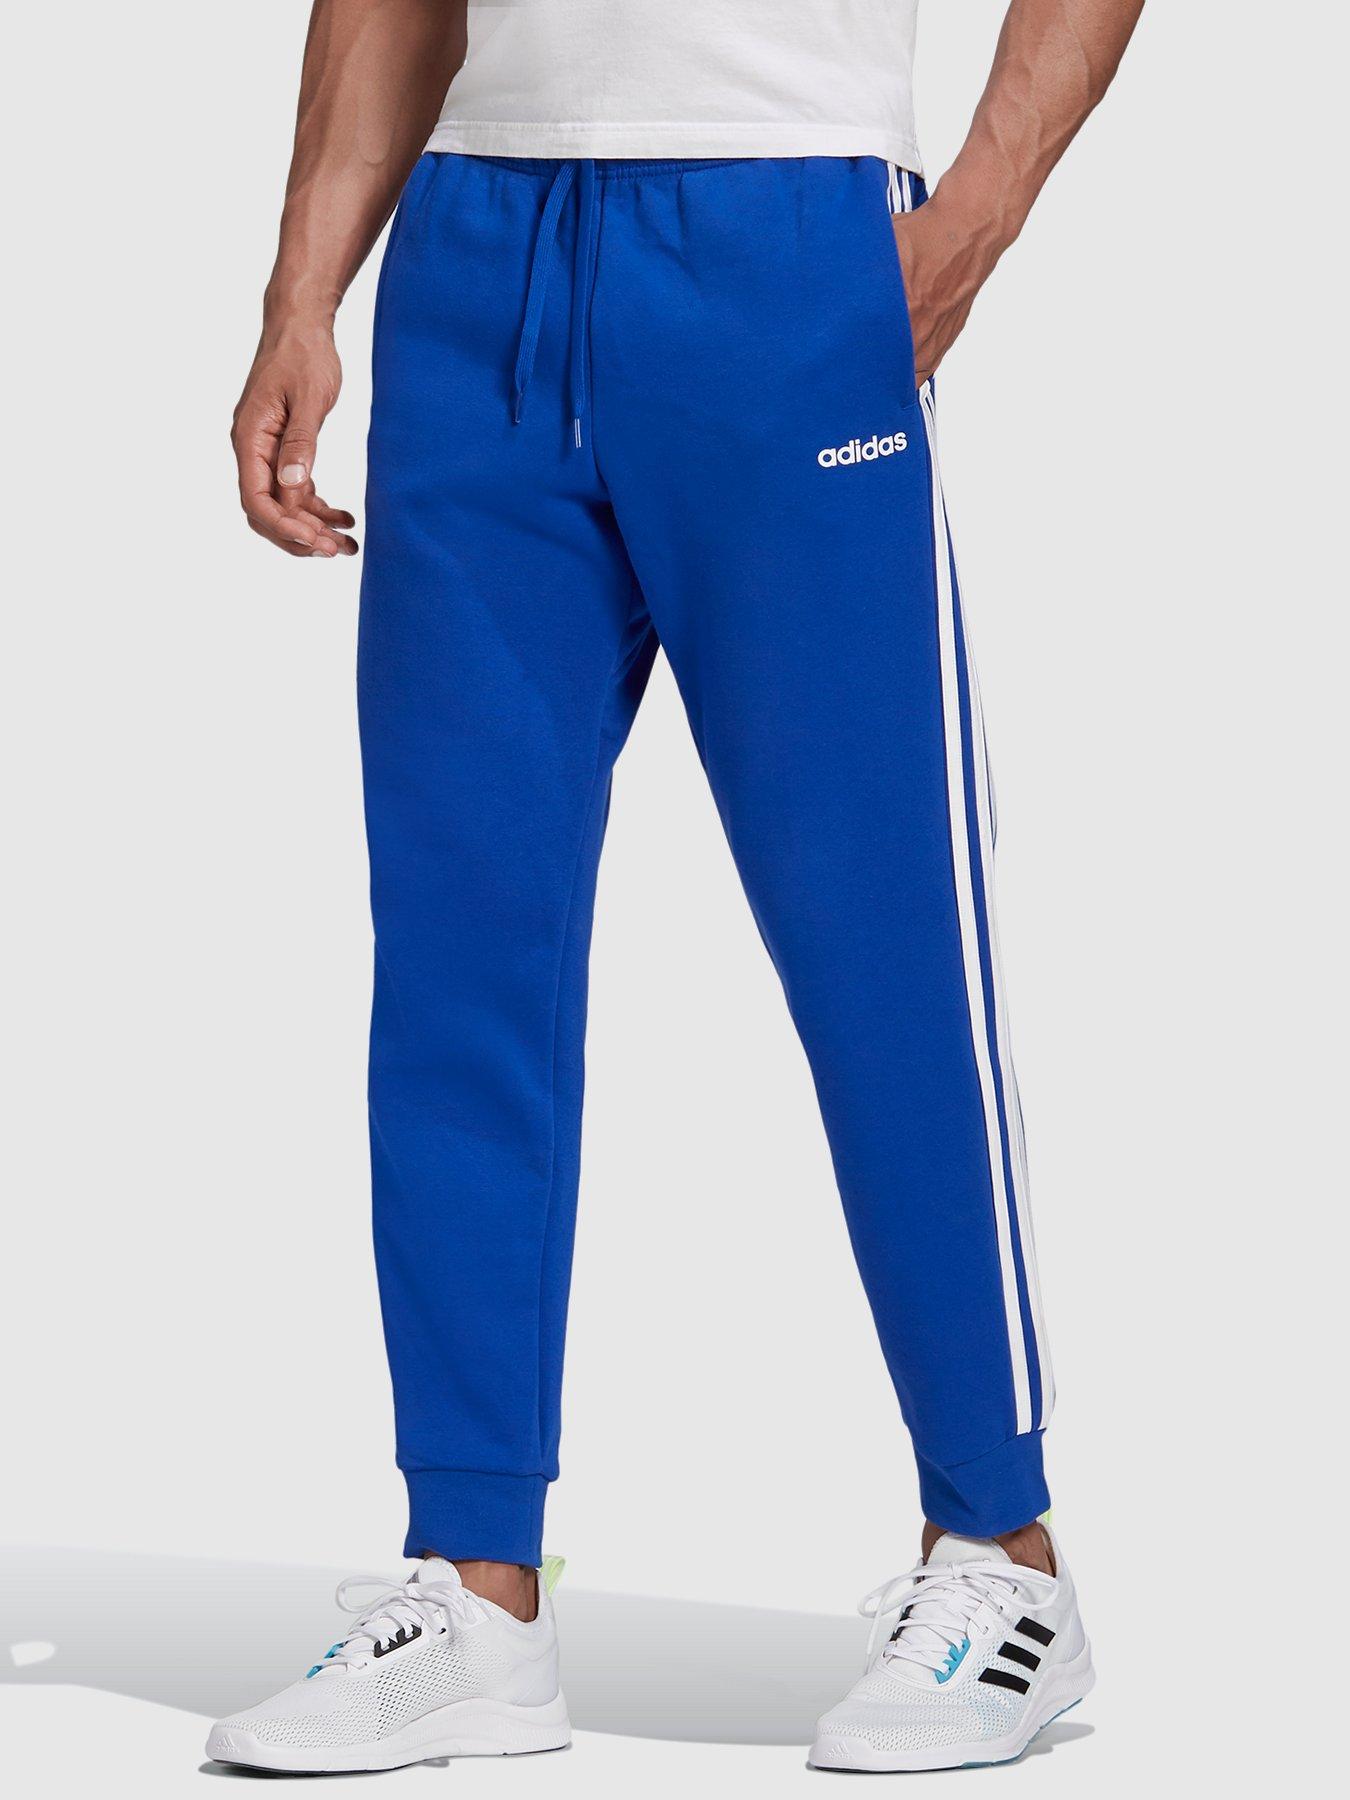 blue stripe adidas pants